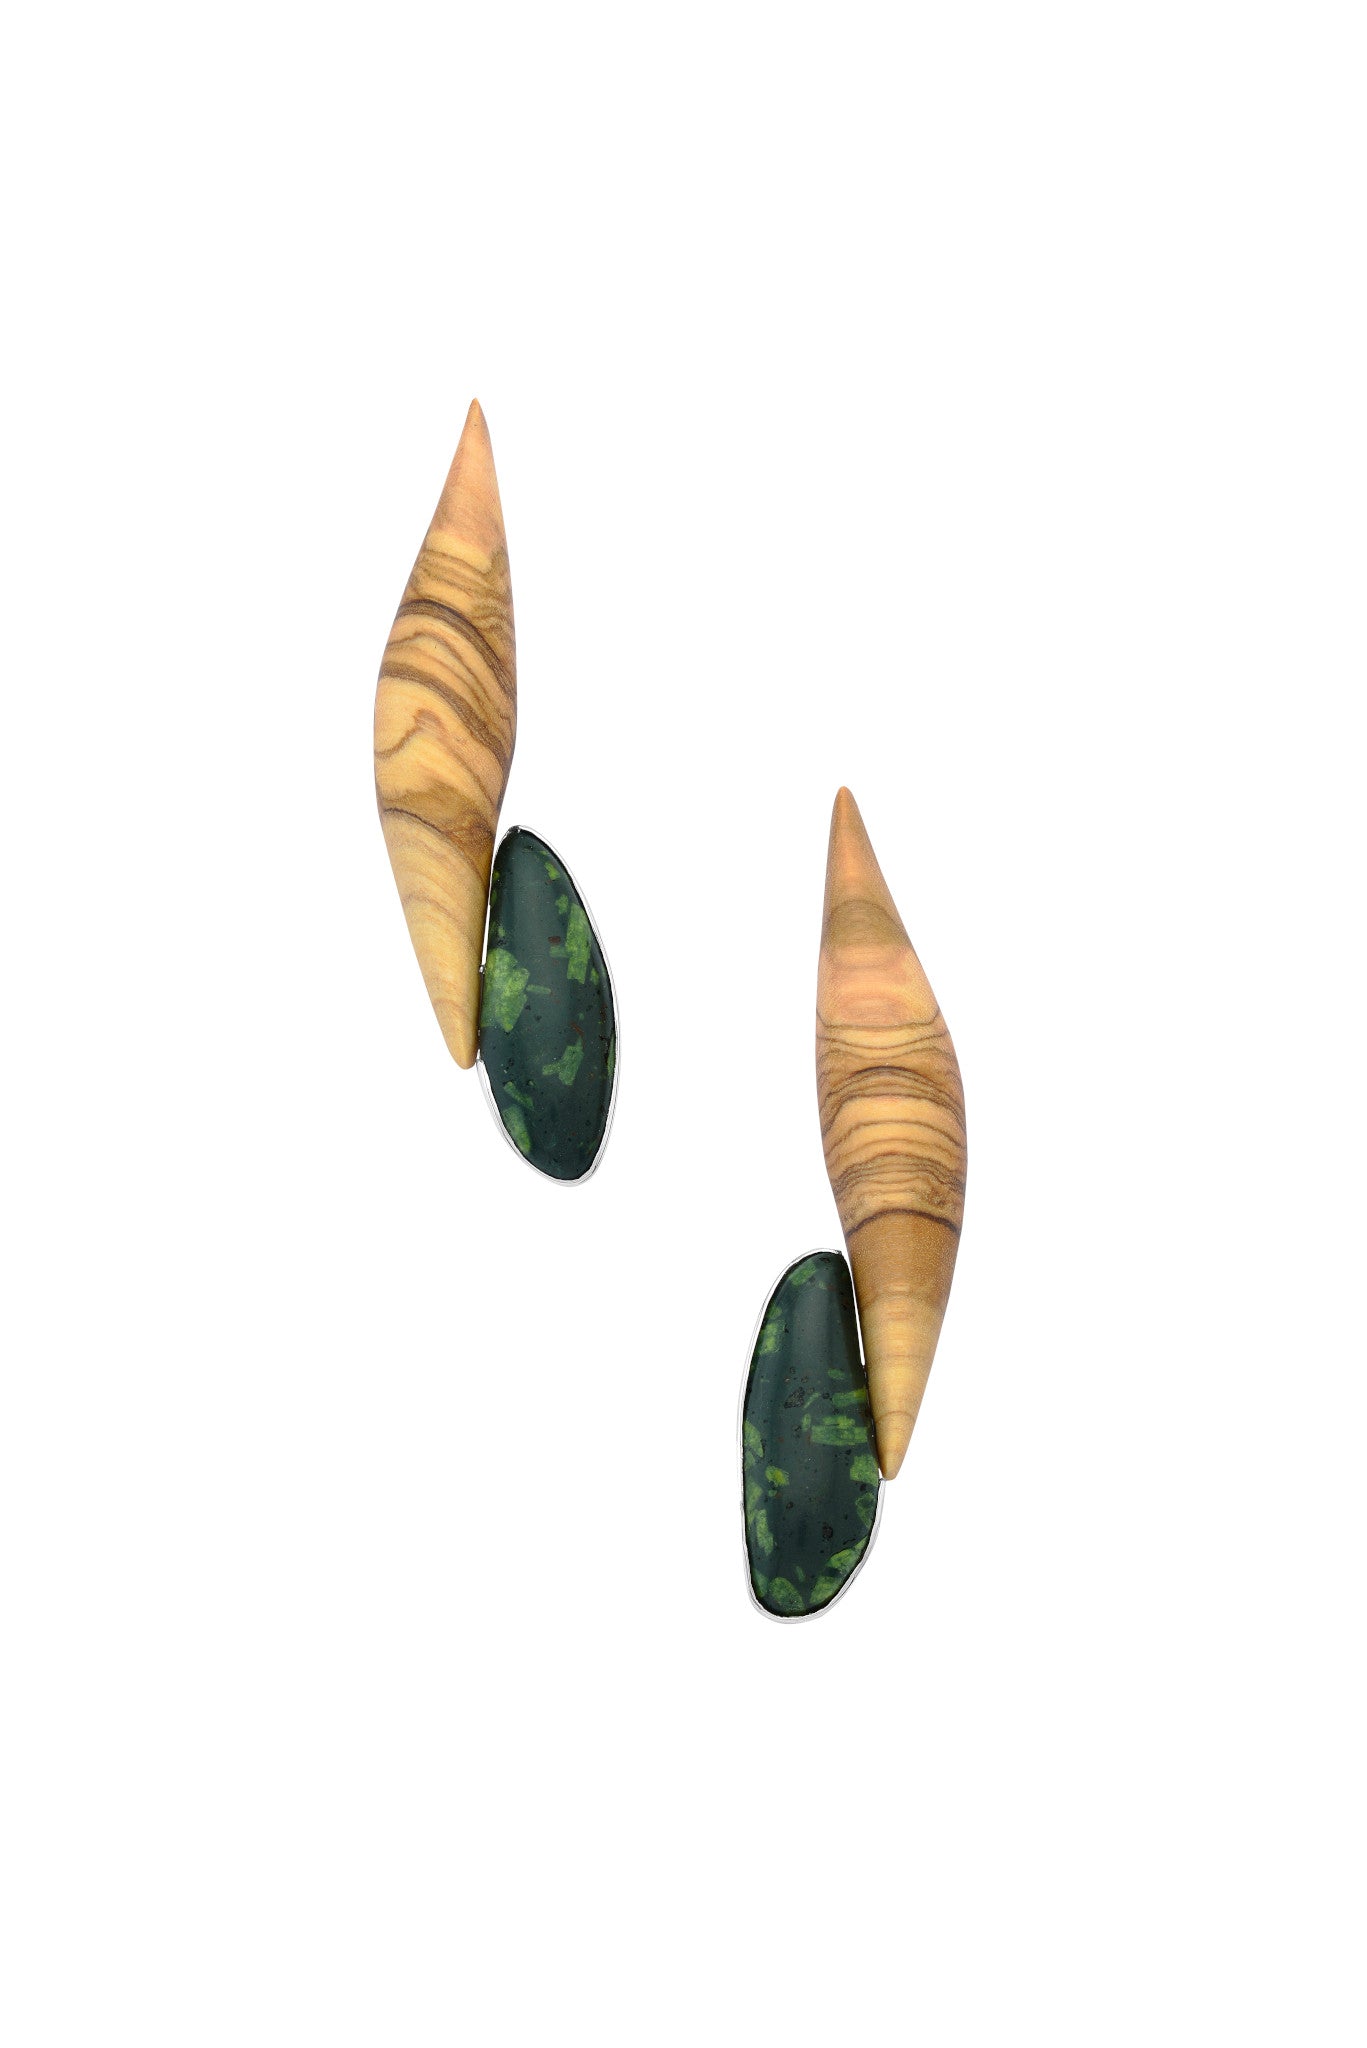 Enosis Large Olive Wood/ Stone Earrings